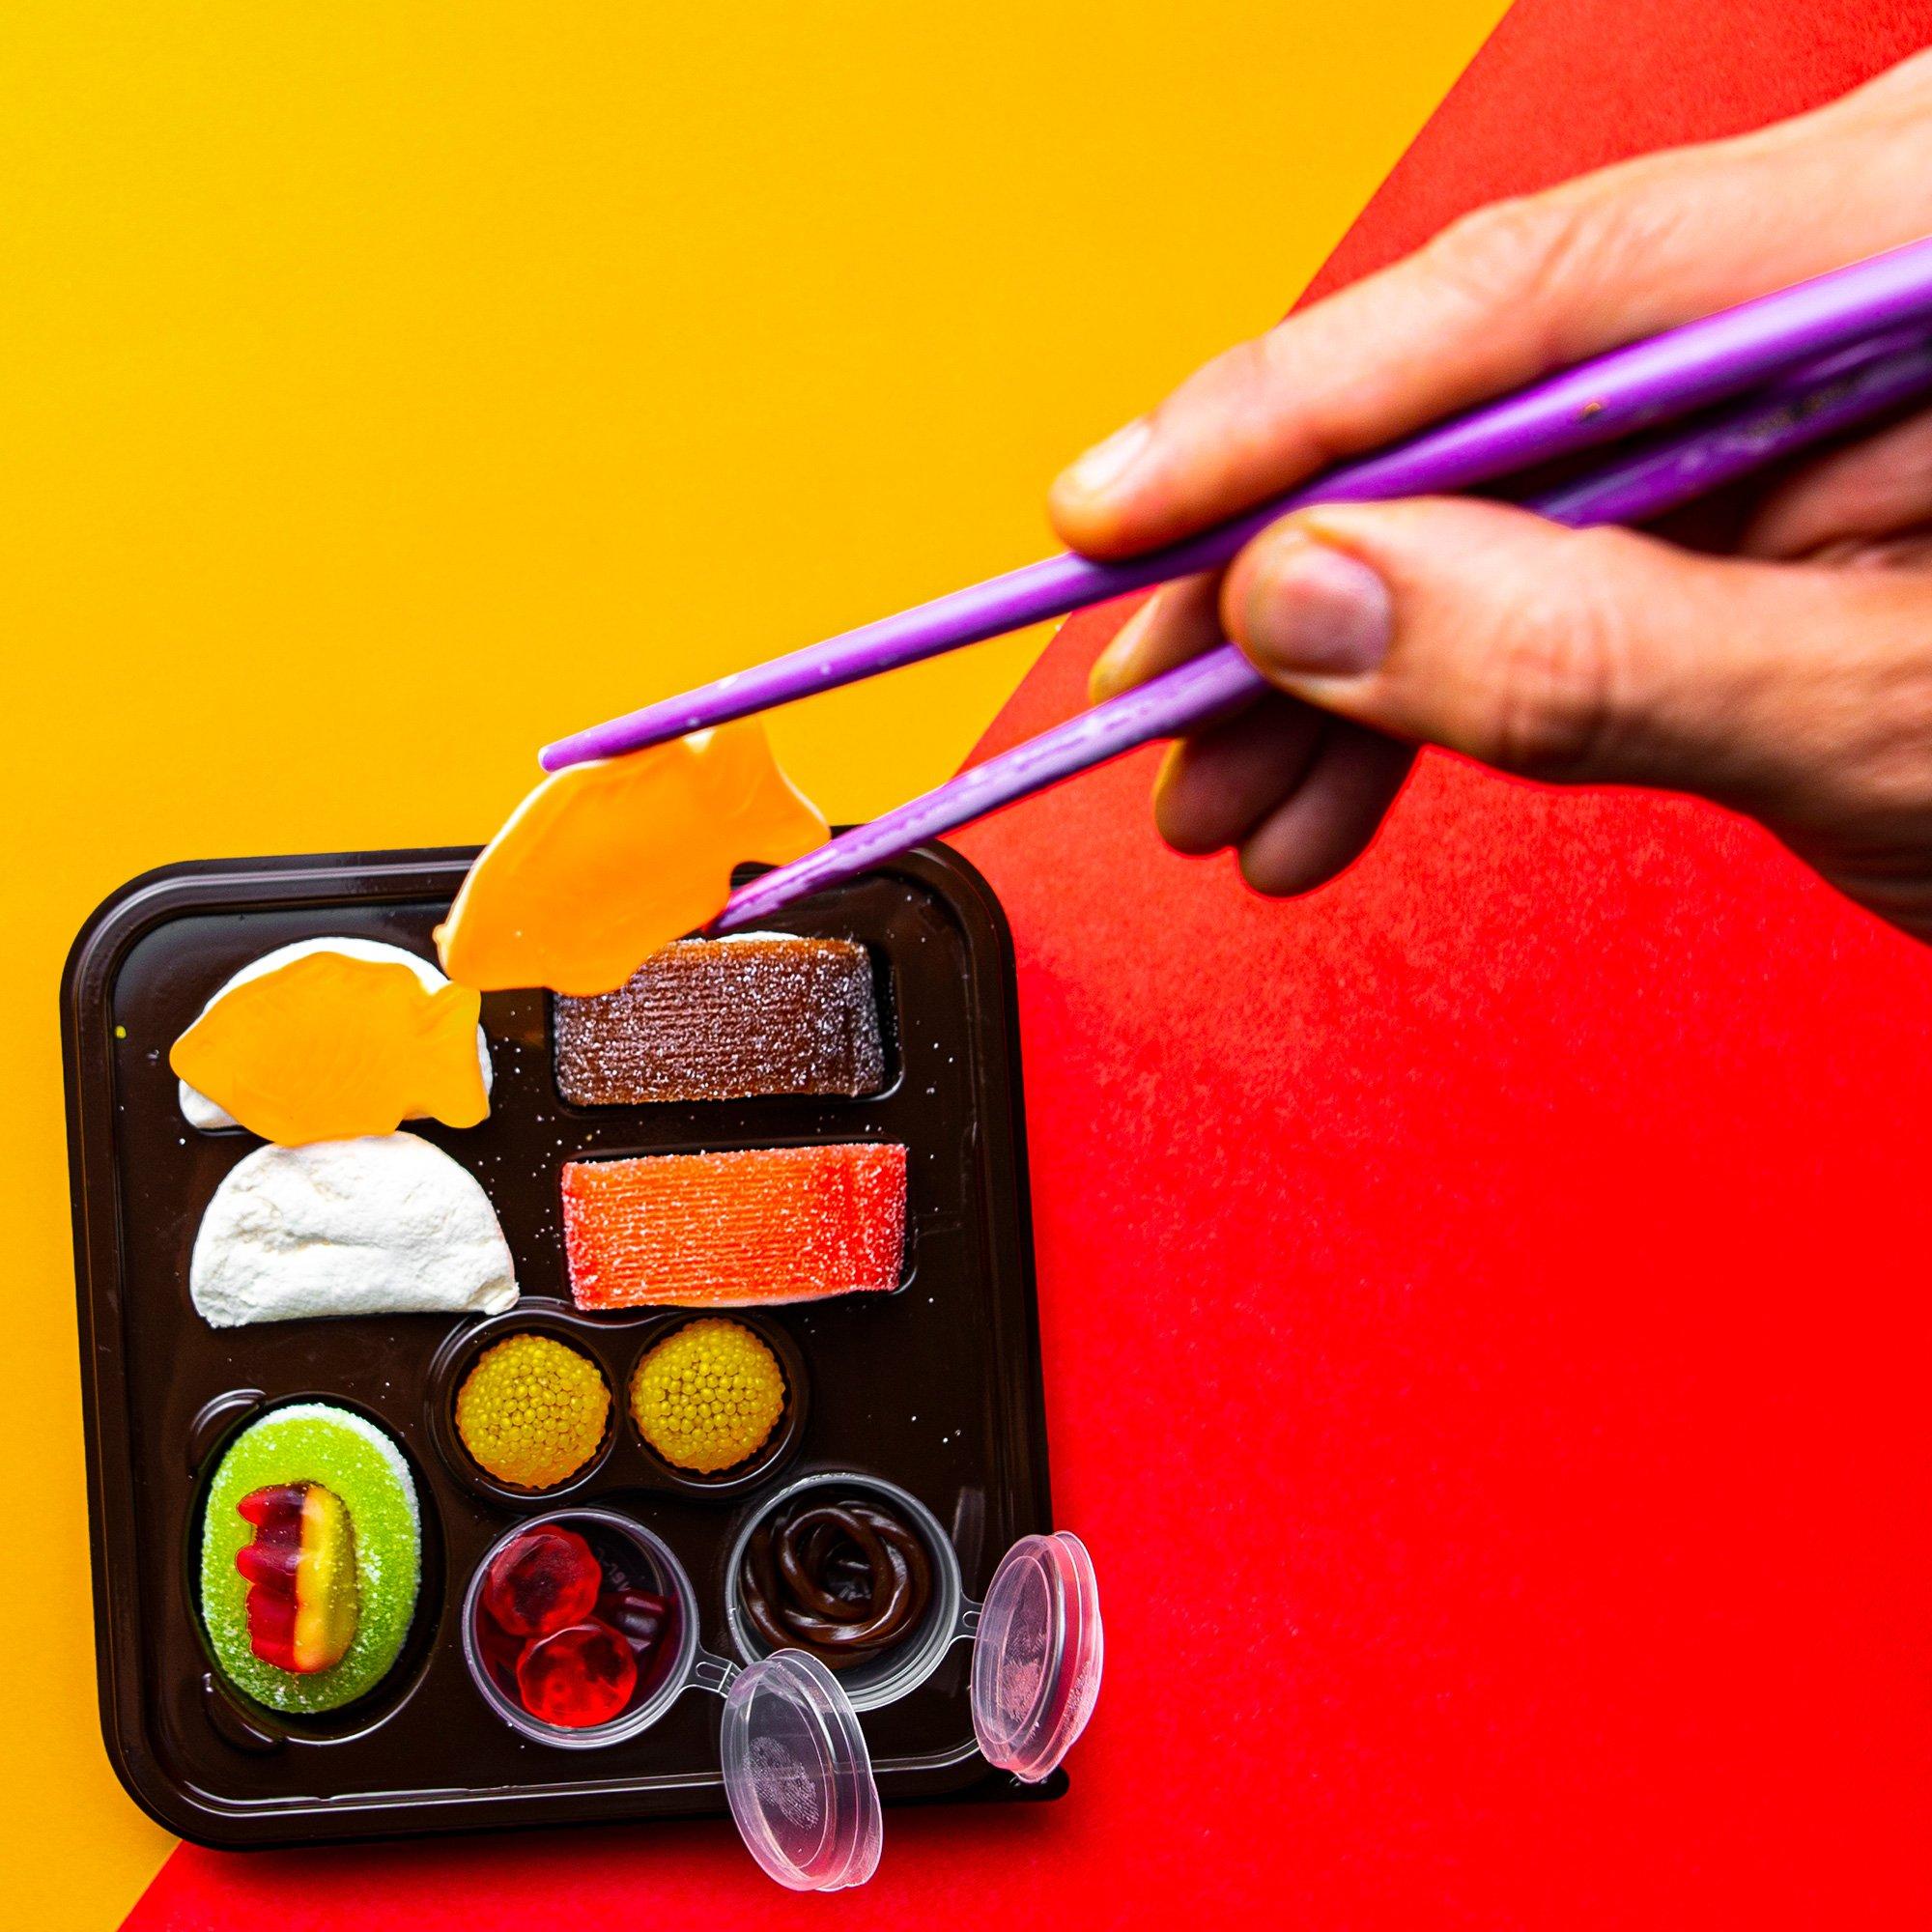 Mini Gummy Sushi Kit Candy 12ct 